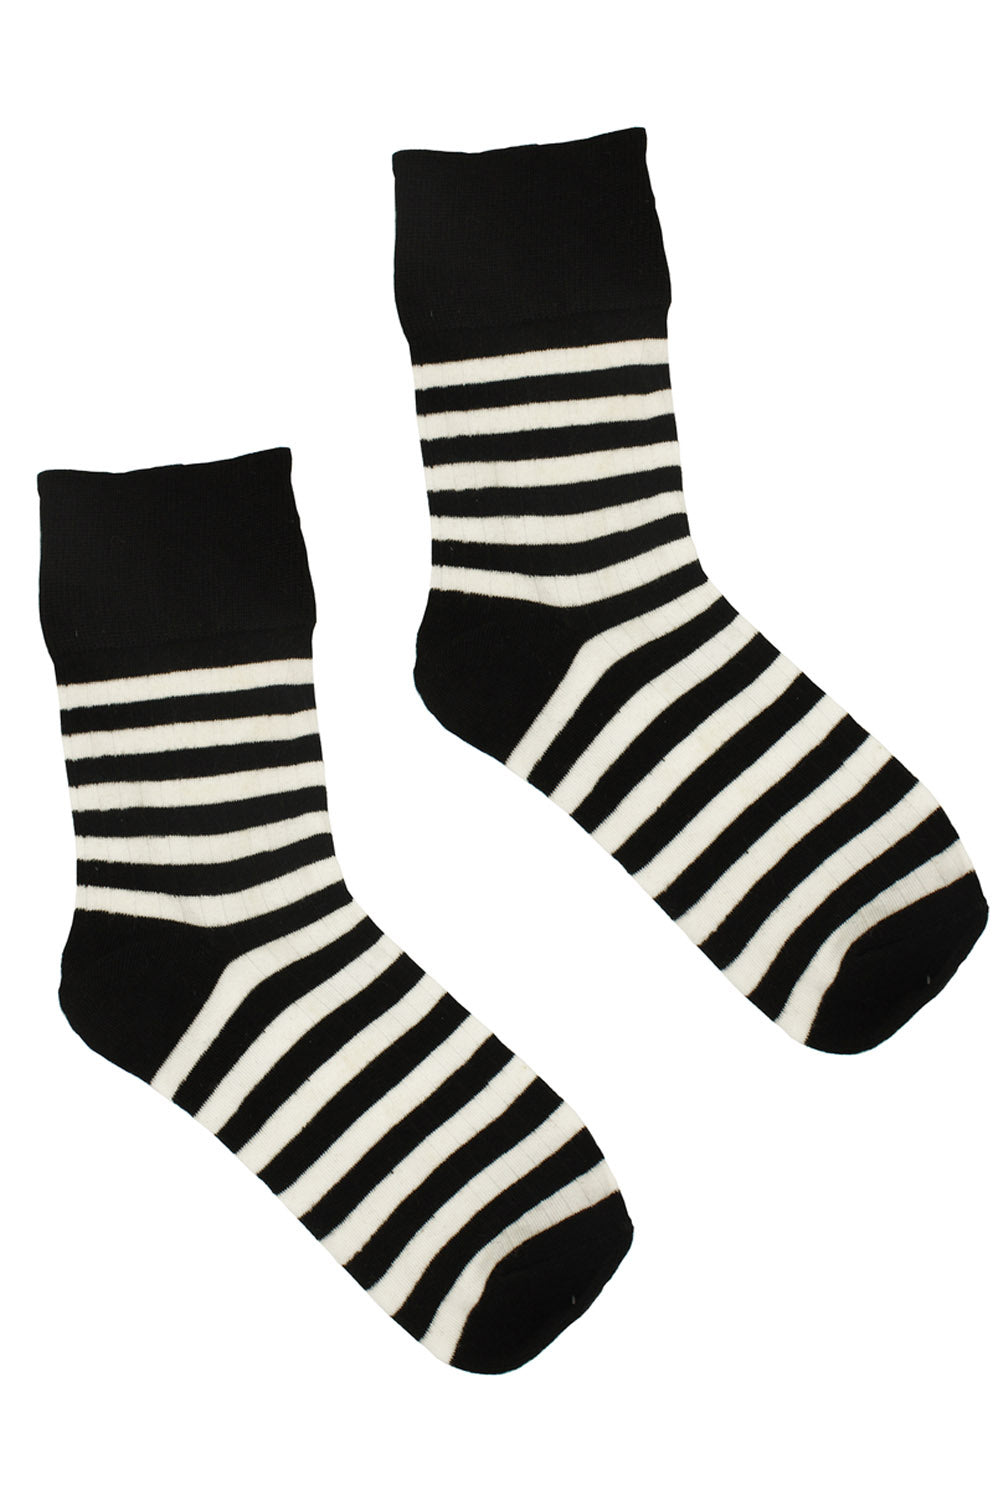 Striped Socks [Black/White]